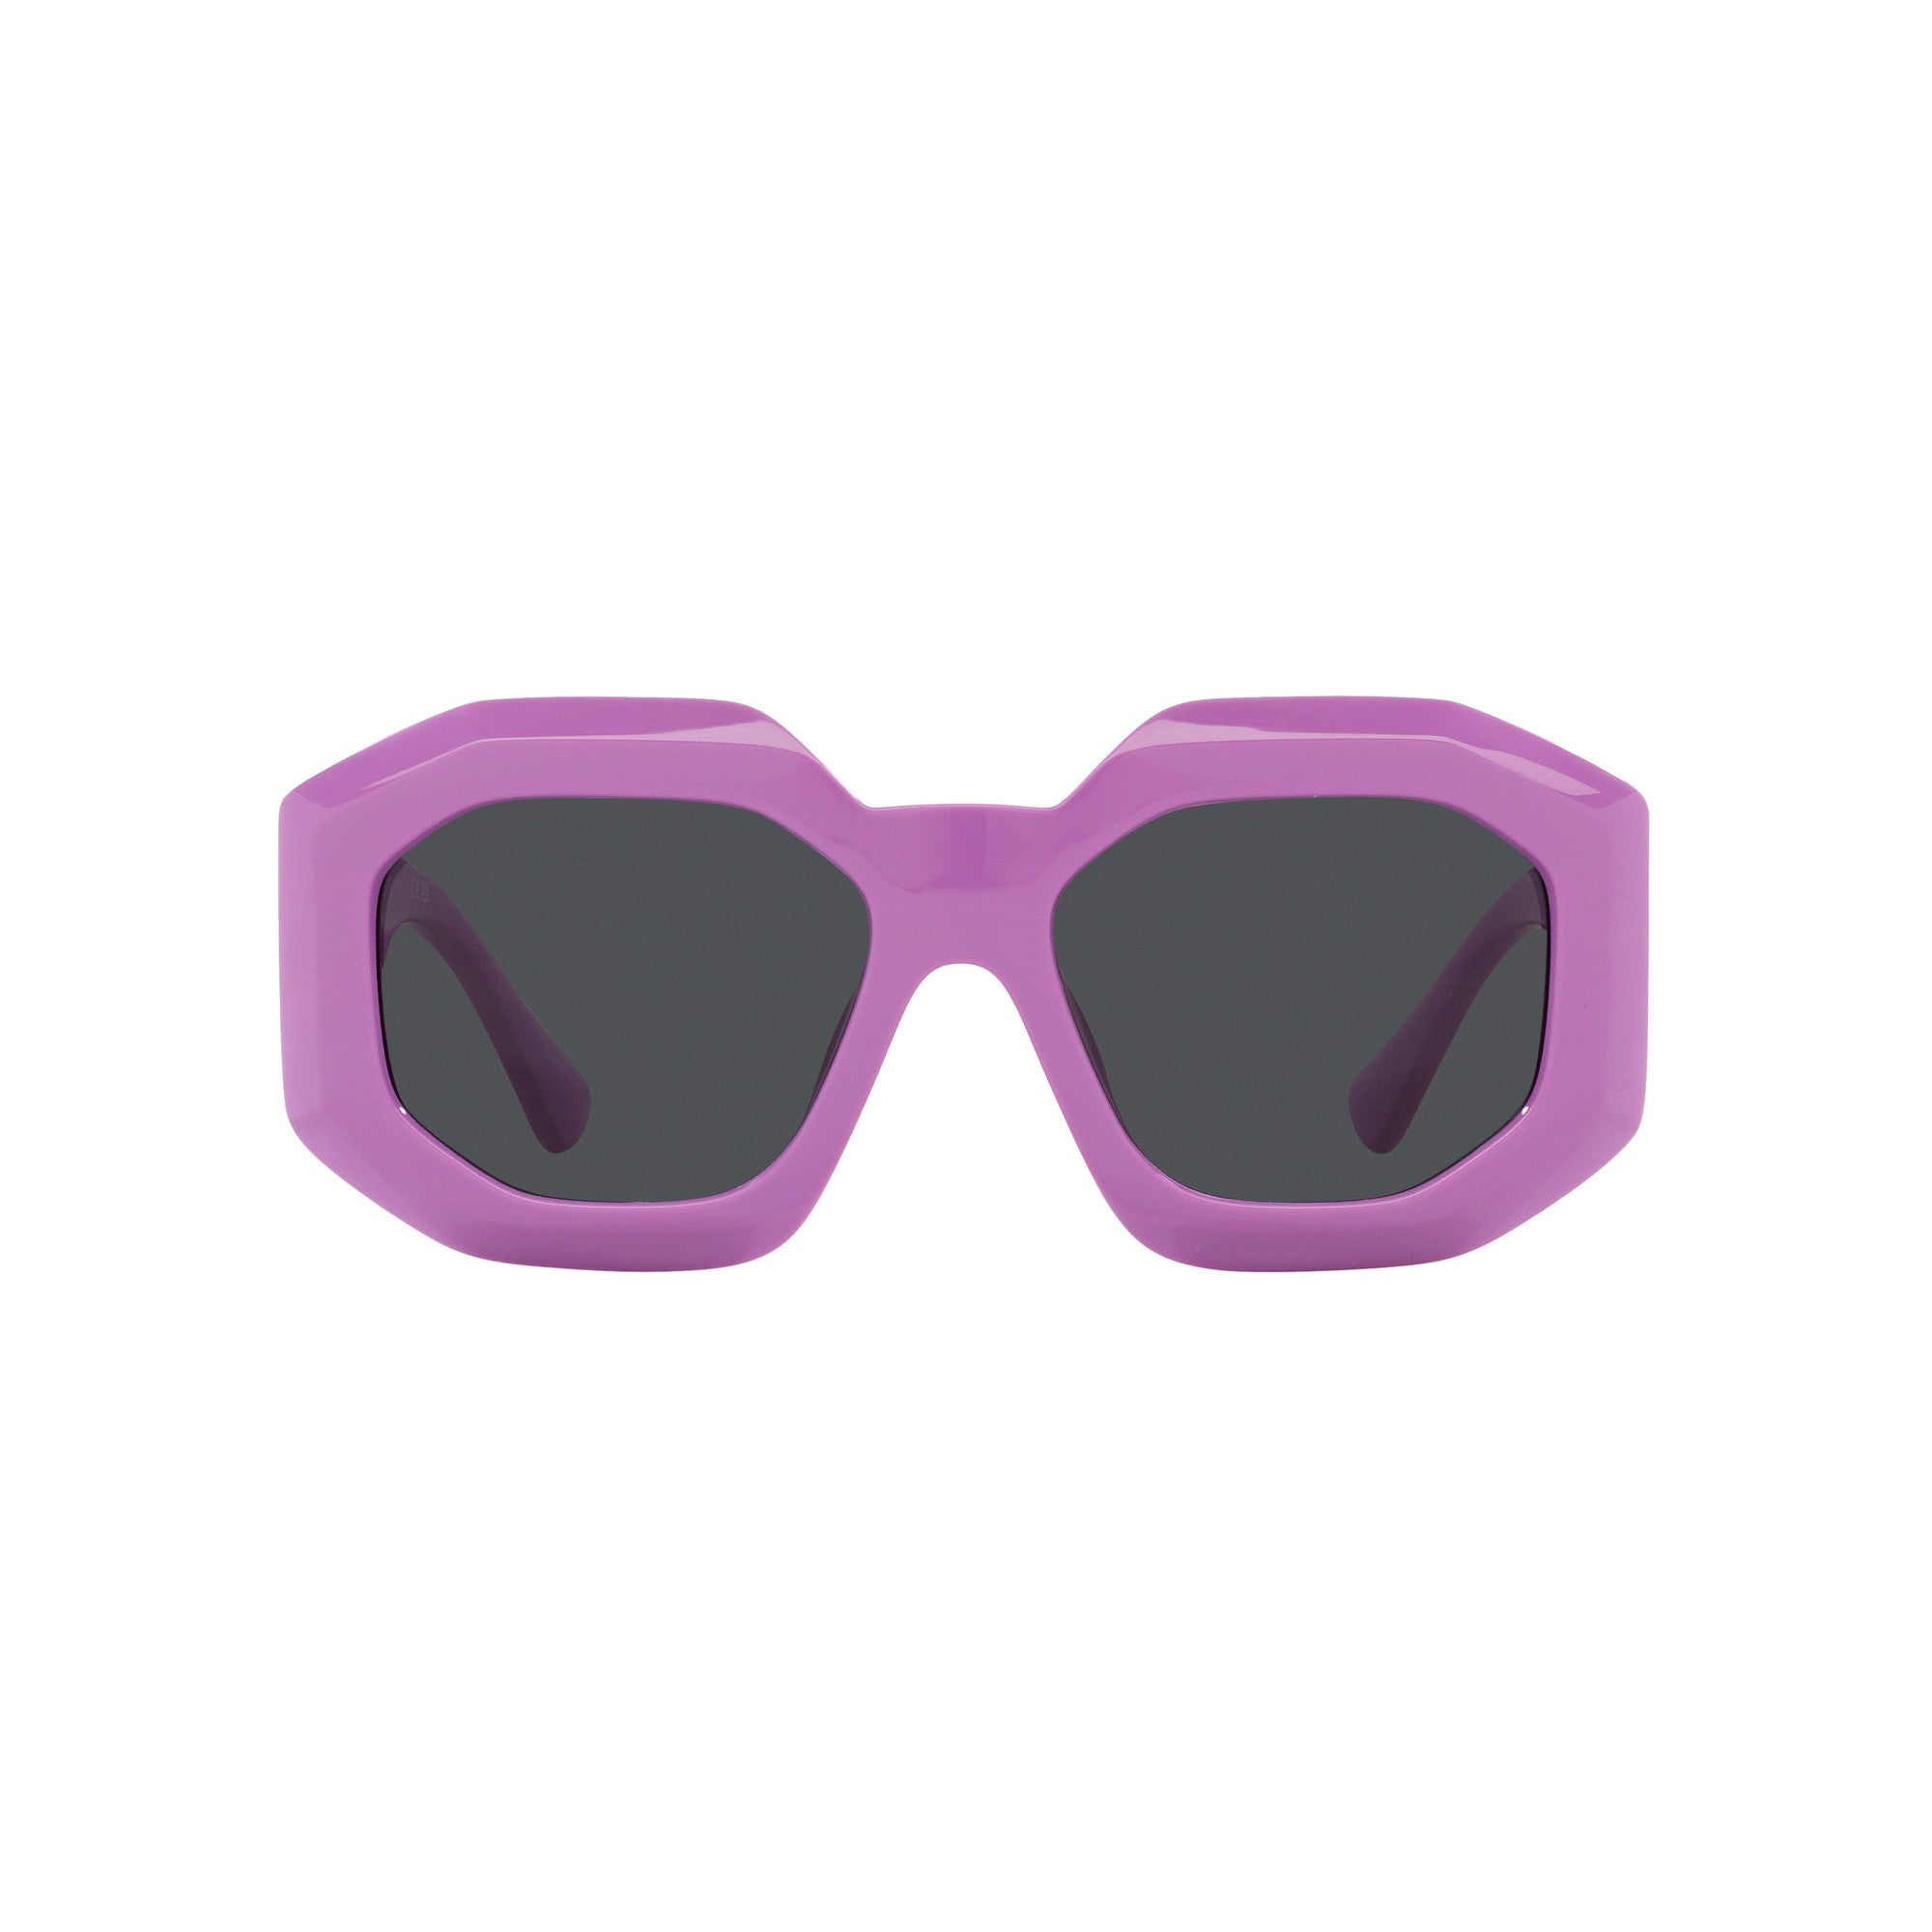 Versace Women's Violet Sunglasses with Dark Grey Solid Color Lenses VE_4424U_536687_56mm